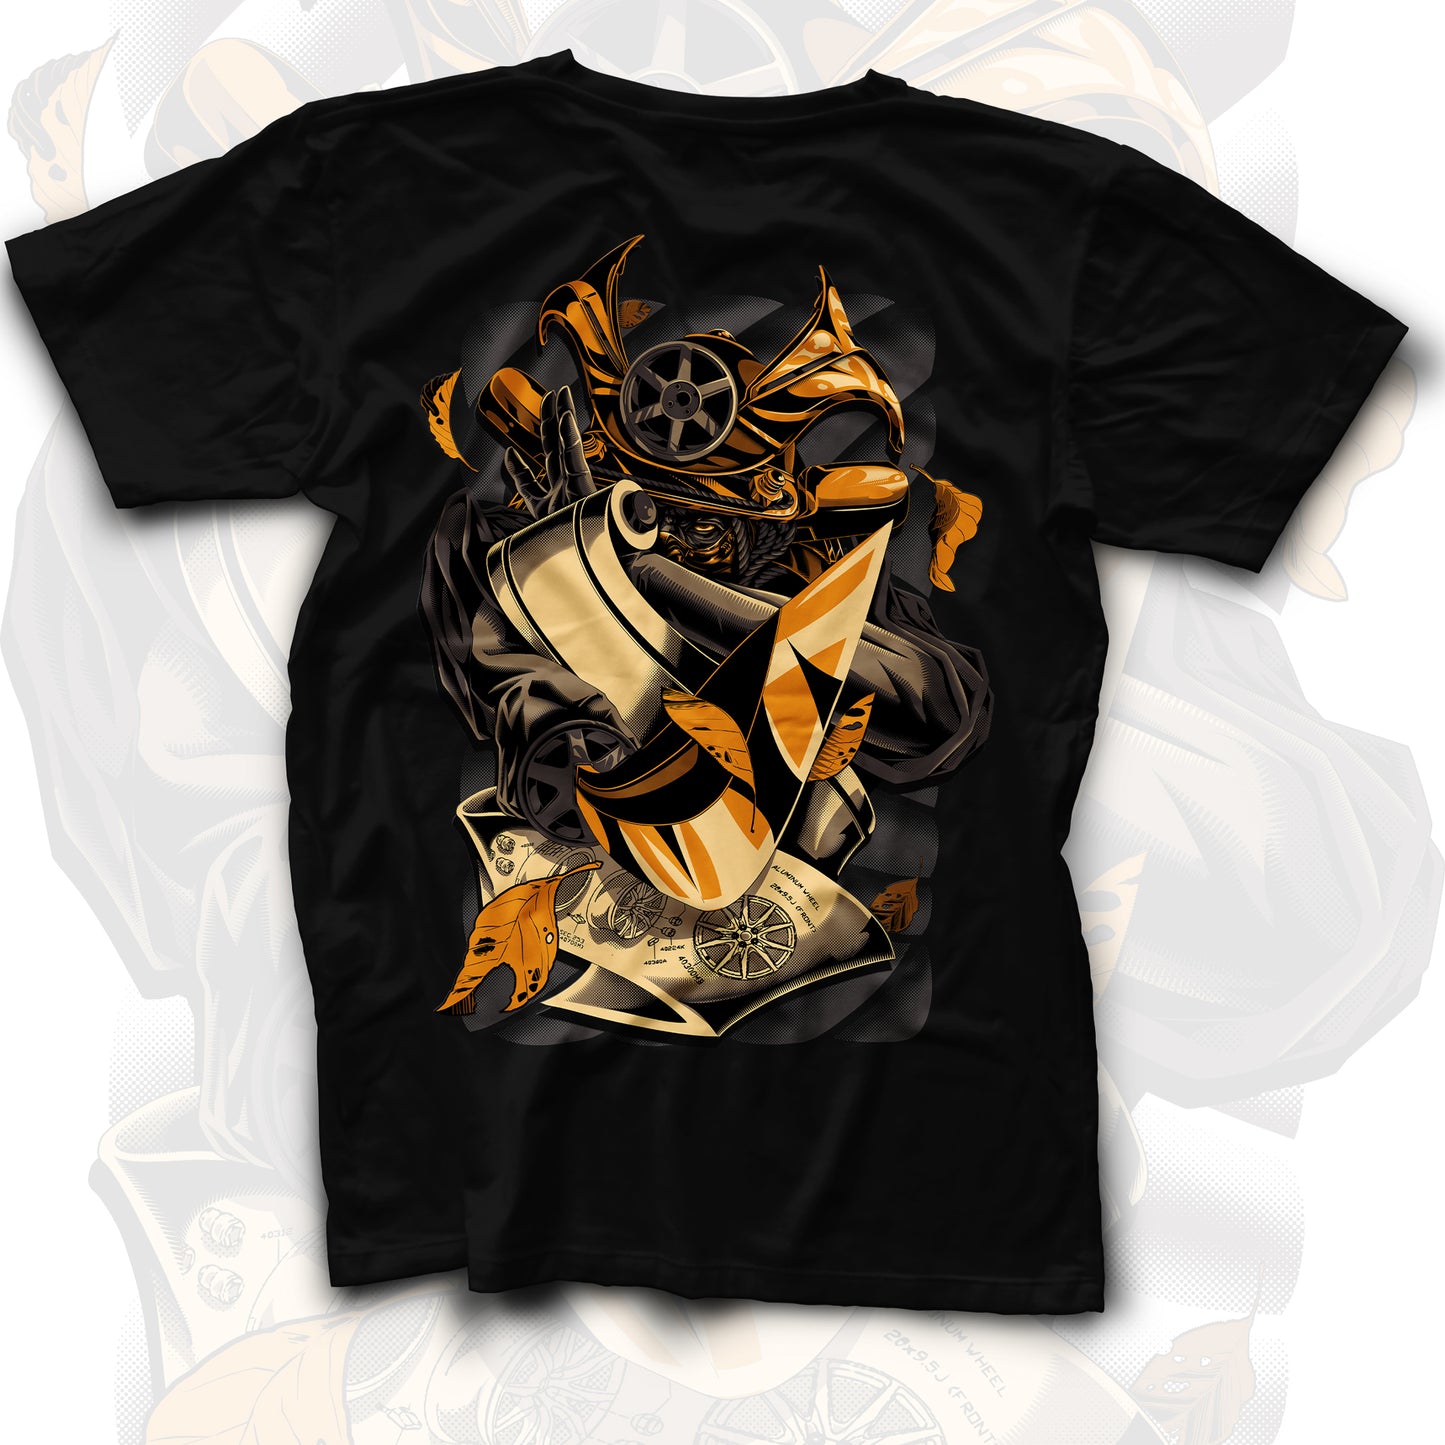 T-shirt - Black Shogun Heritage